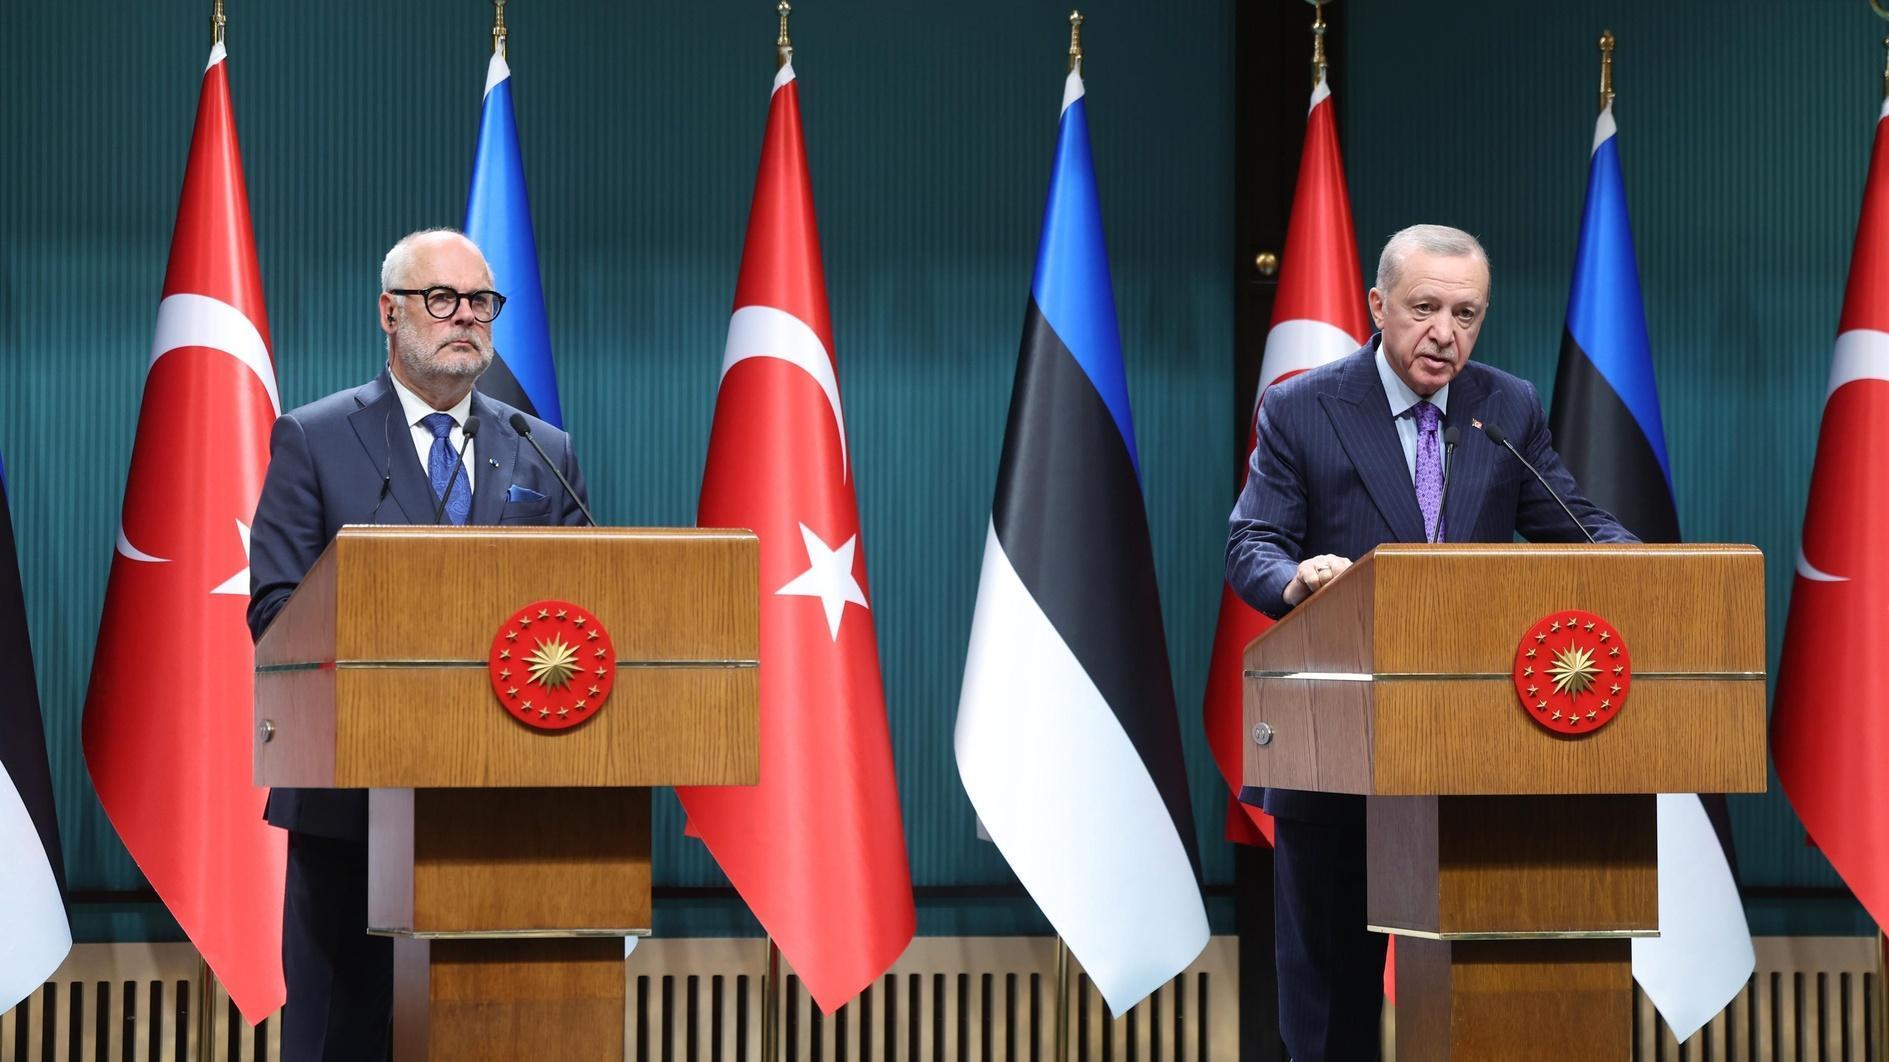 Erdoğan reaffirms Türkiye’s EU bid as strategic goal